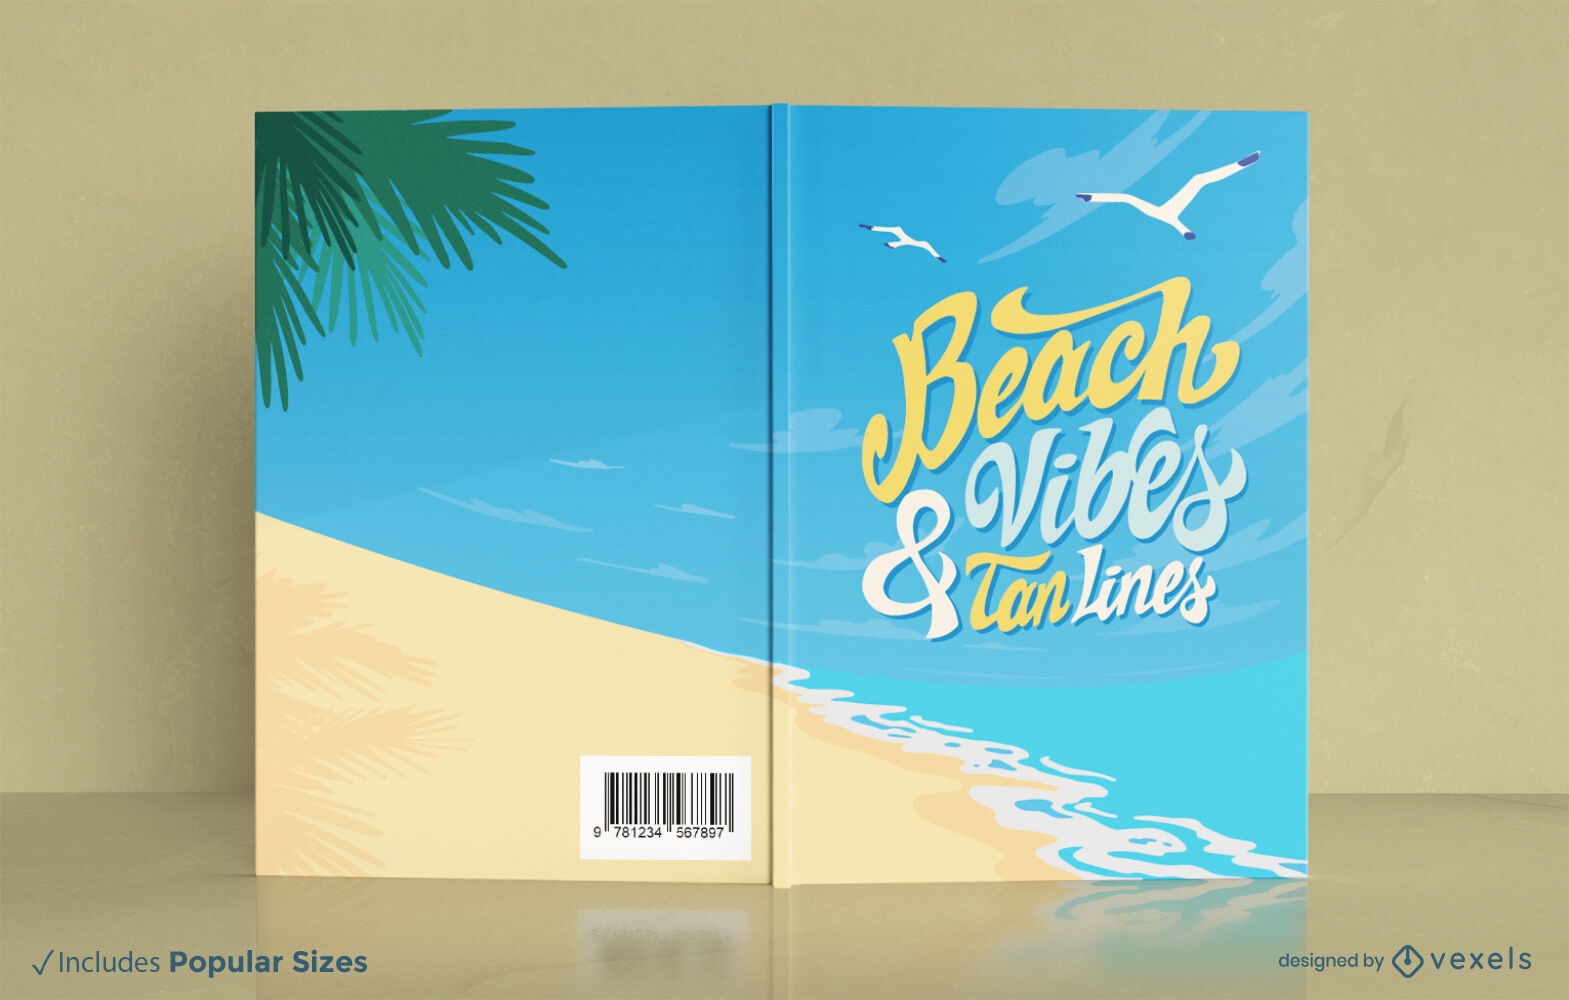 Beach vibes book cover design